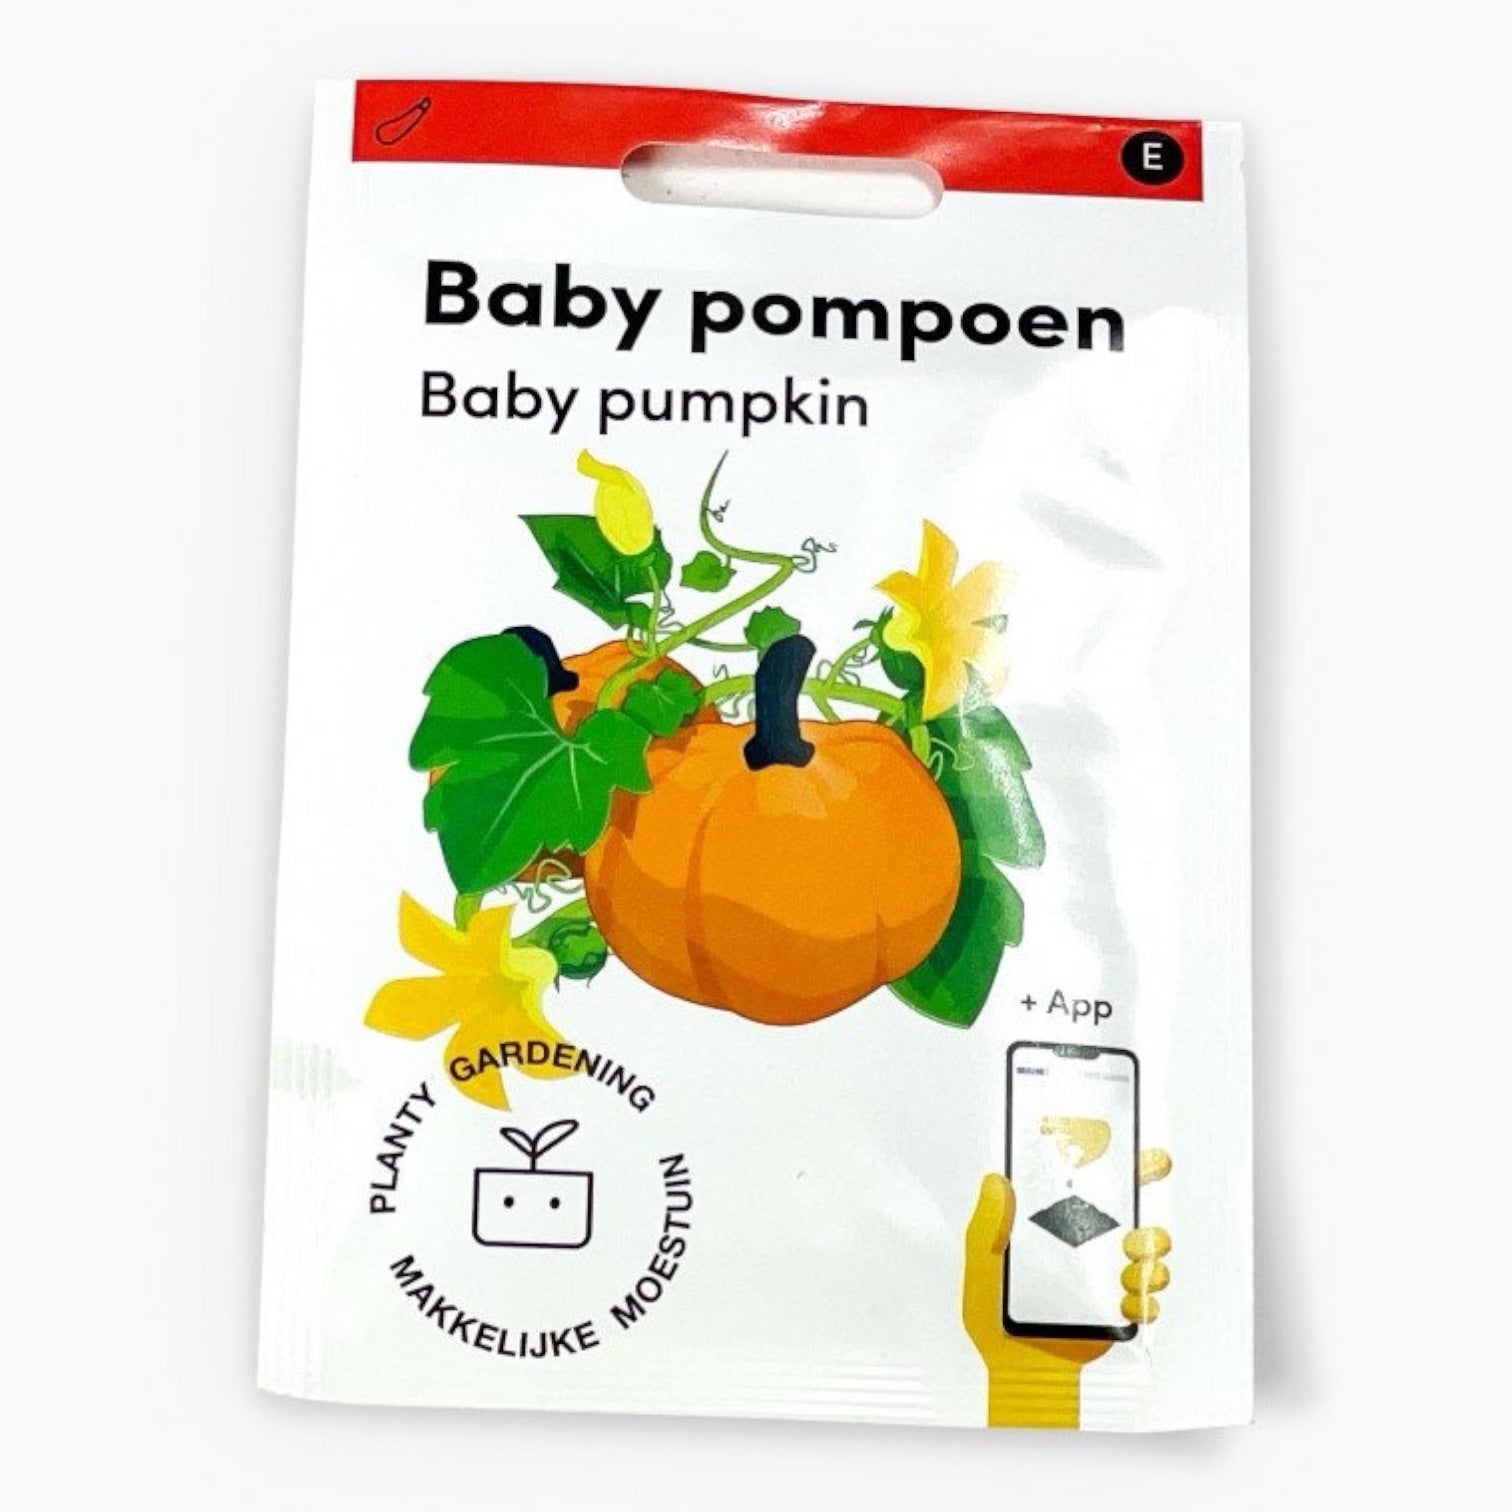 Baby pompoen - Parrot and Bird Supplies